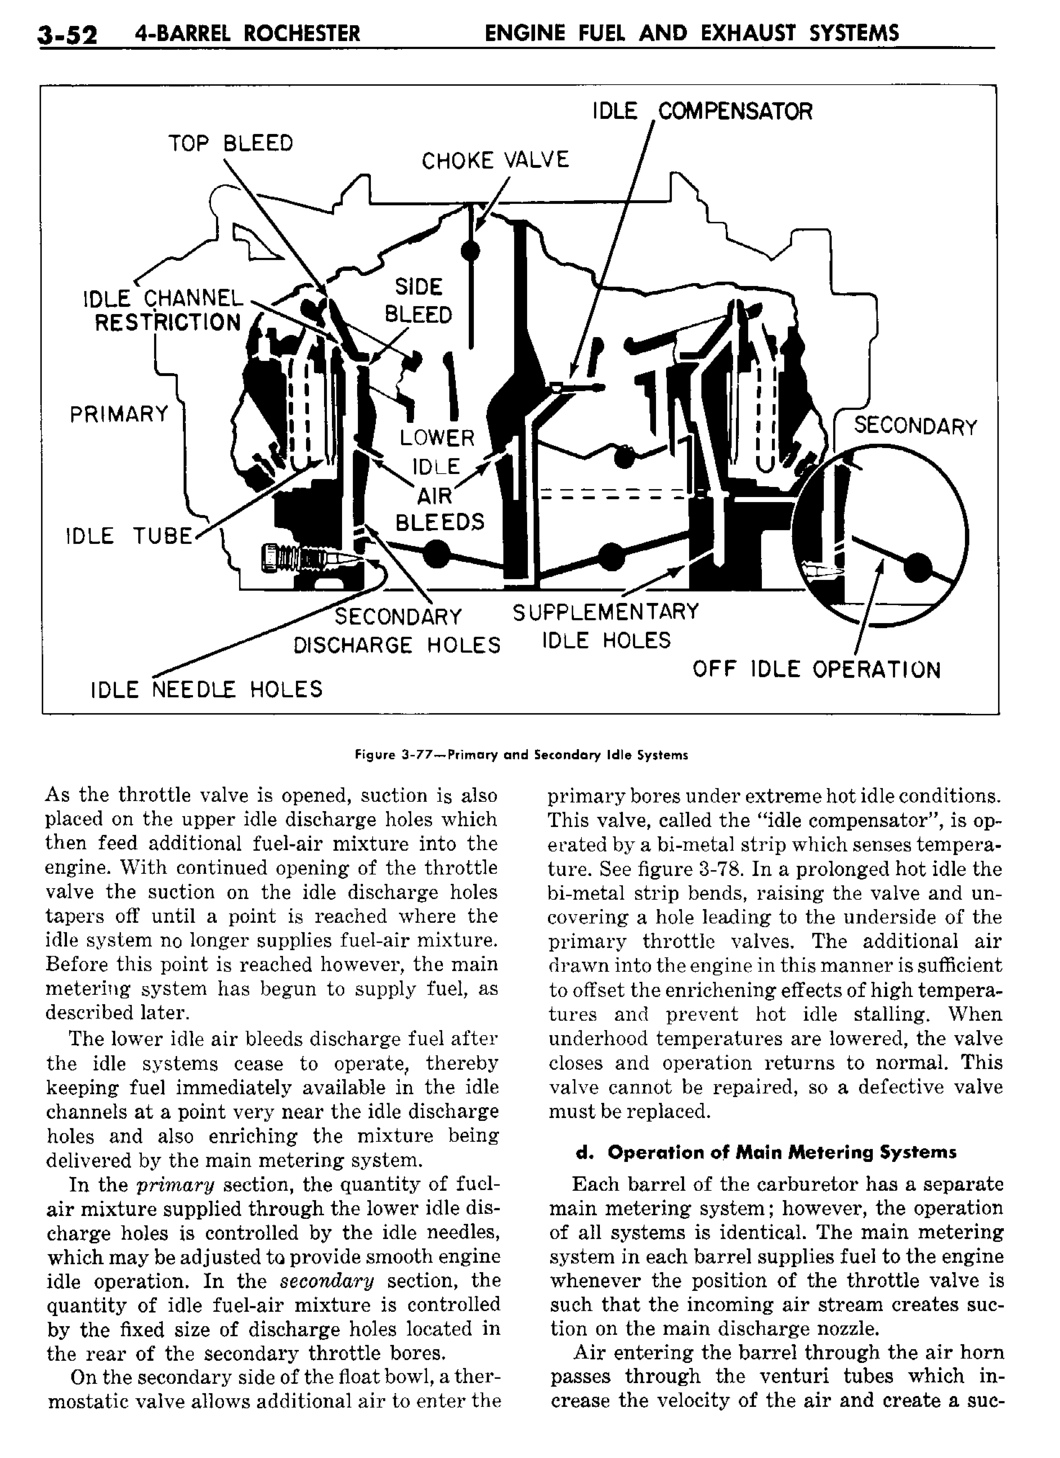 n_04 1960 Buick Shop Manual - Engine Fuel & Exhaust-052-052.jpg